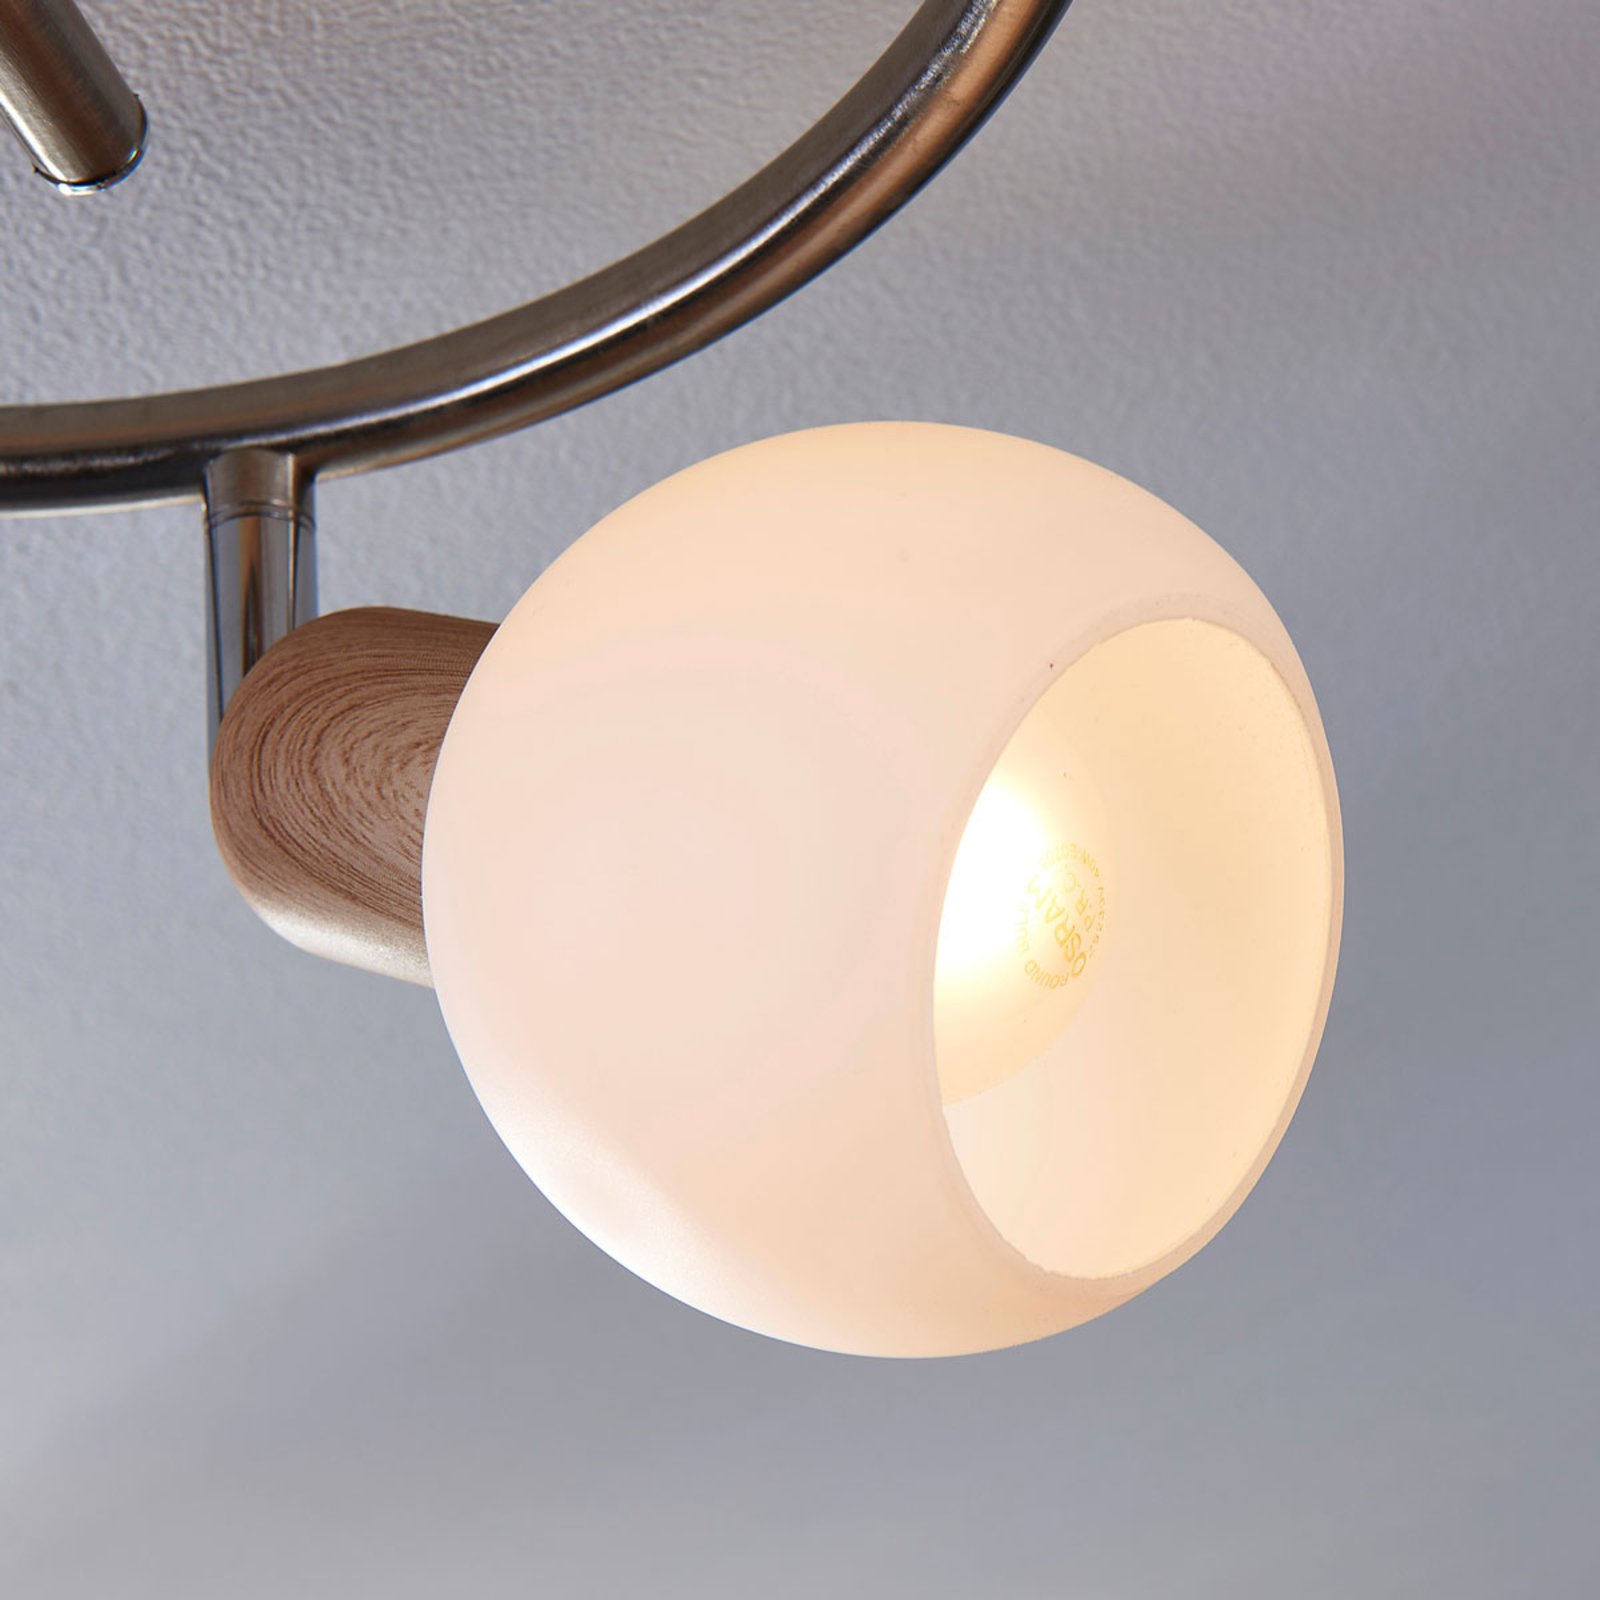 Svenka ceiling light, three-bulb, circular